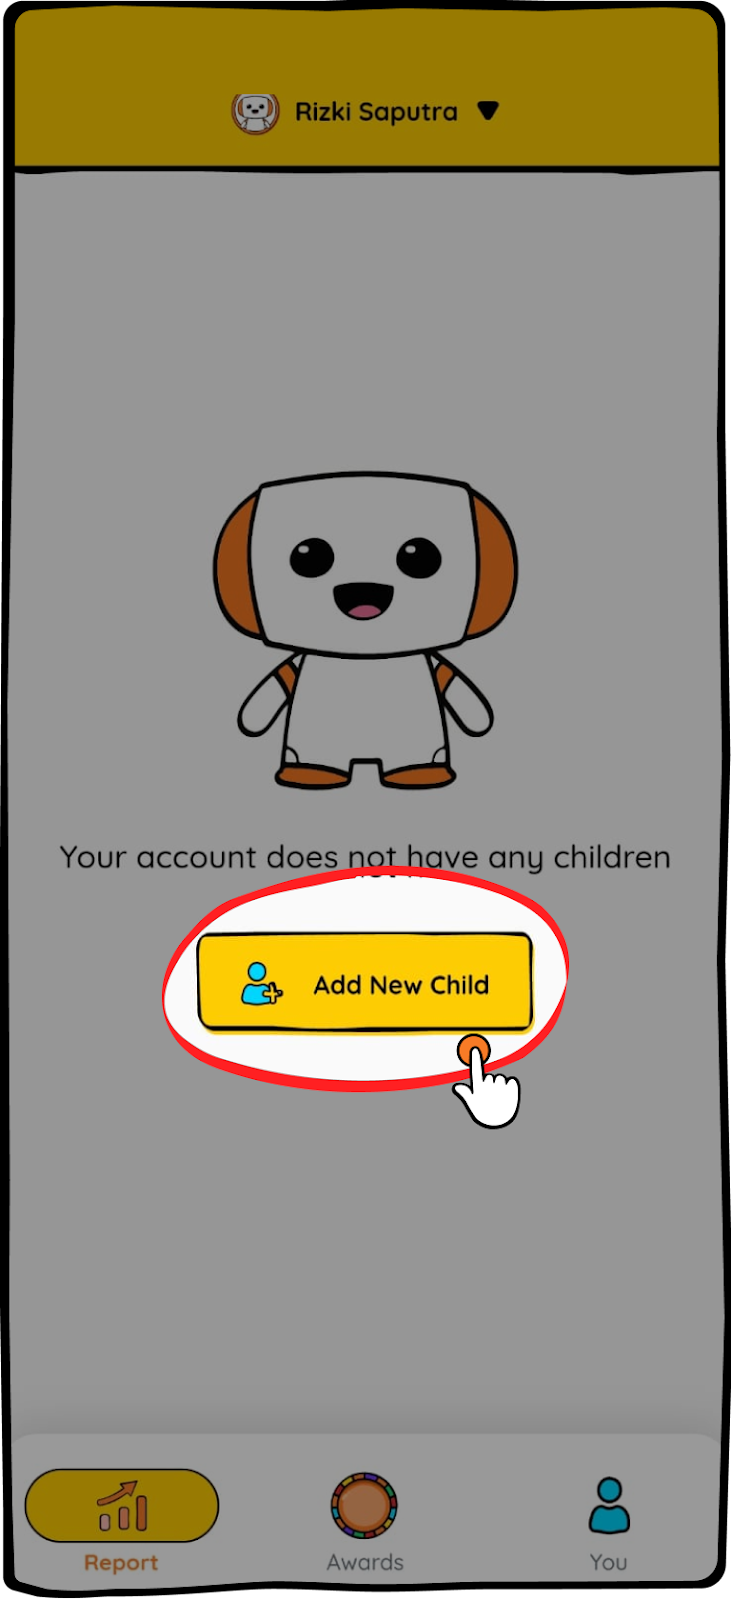 Select "Add New Child."